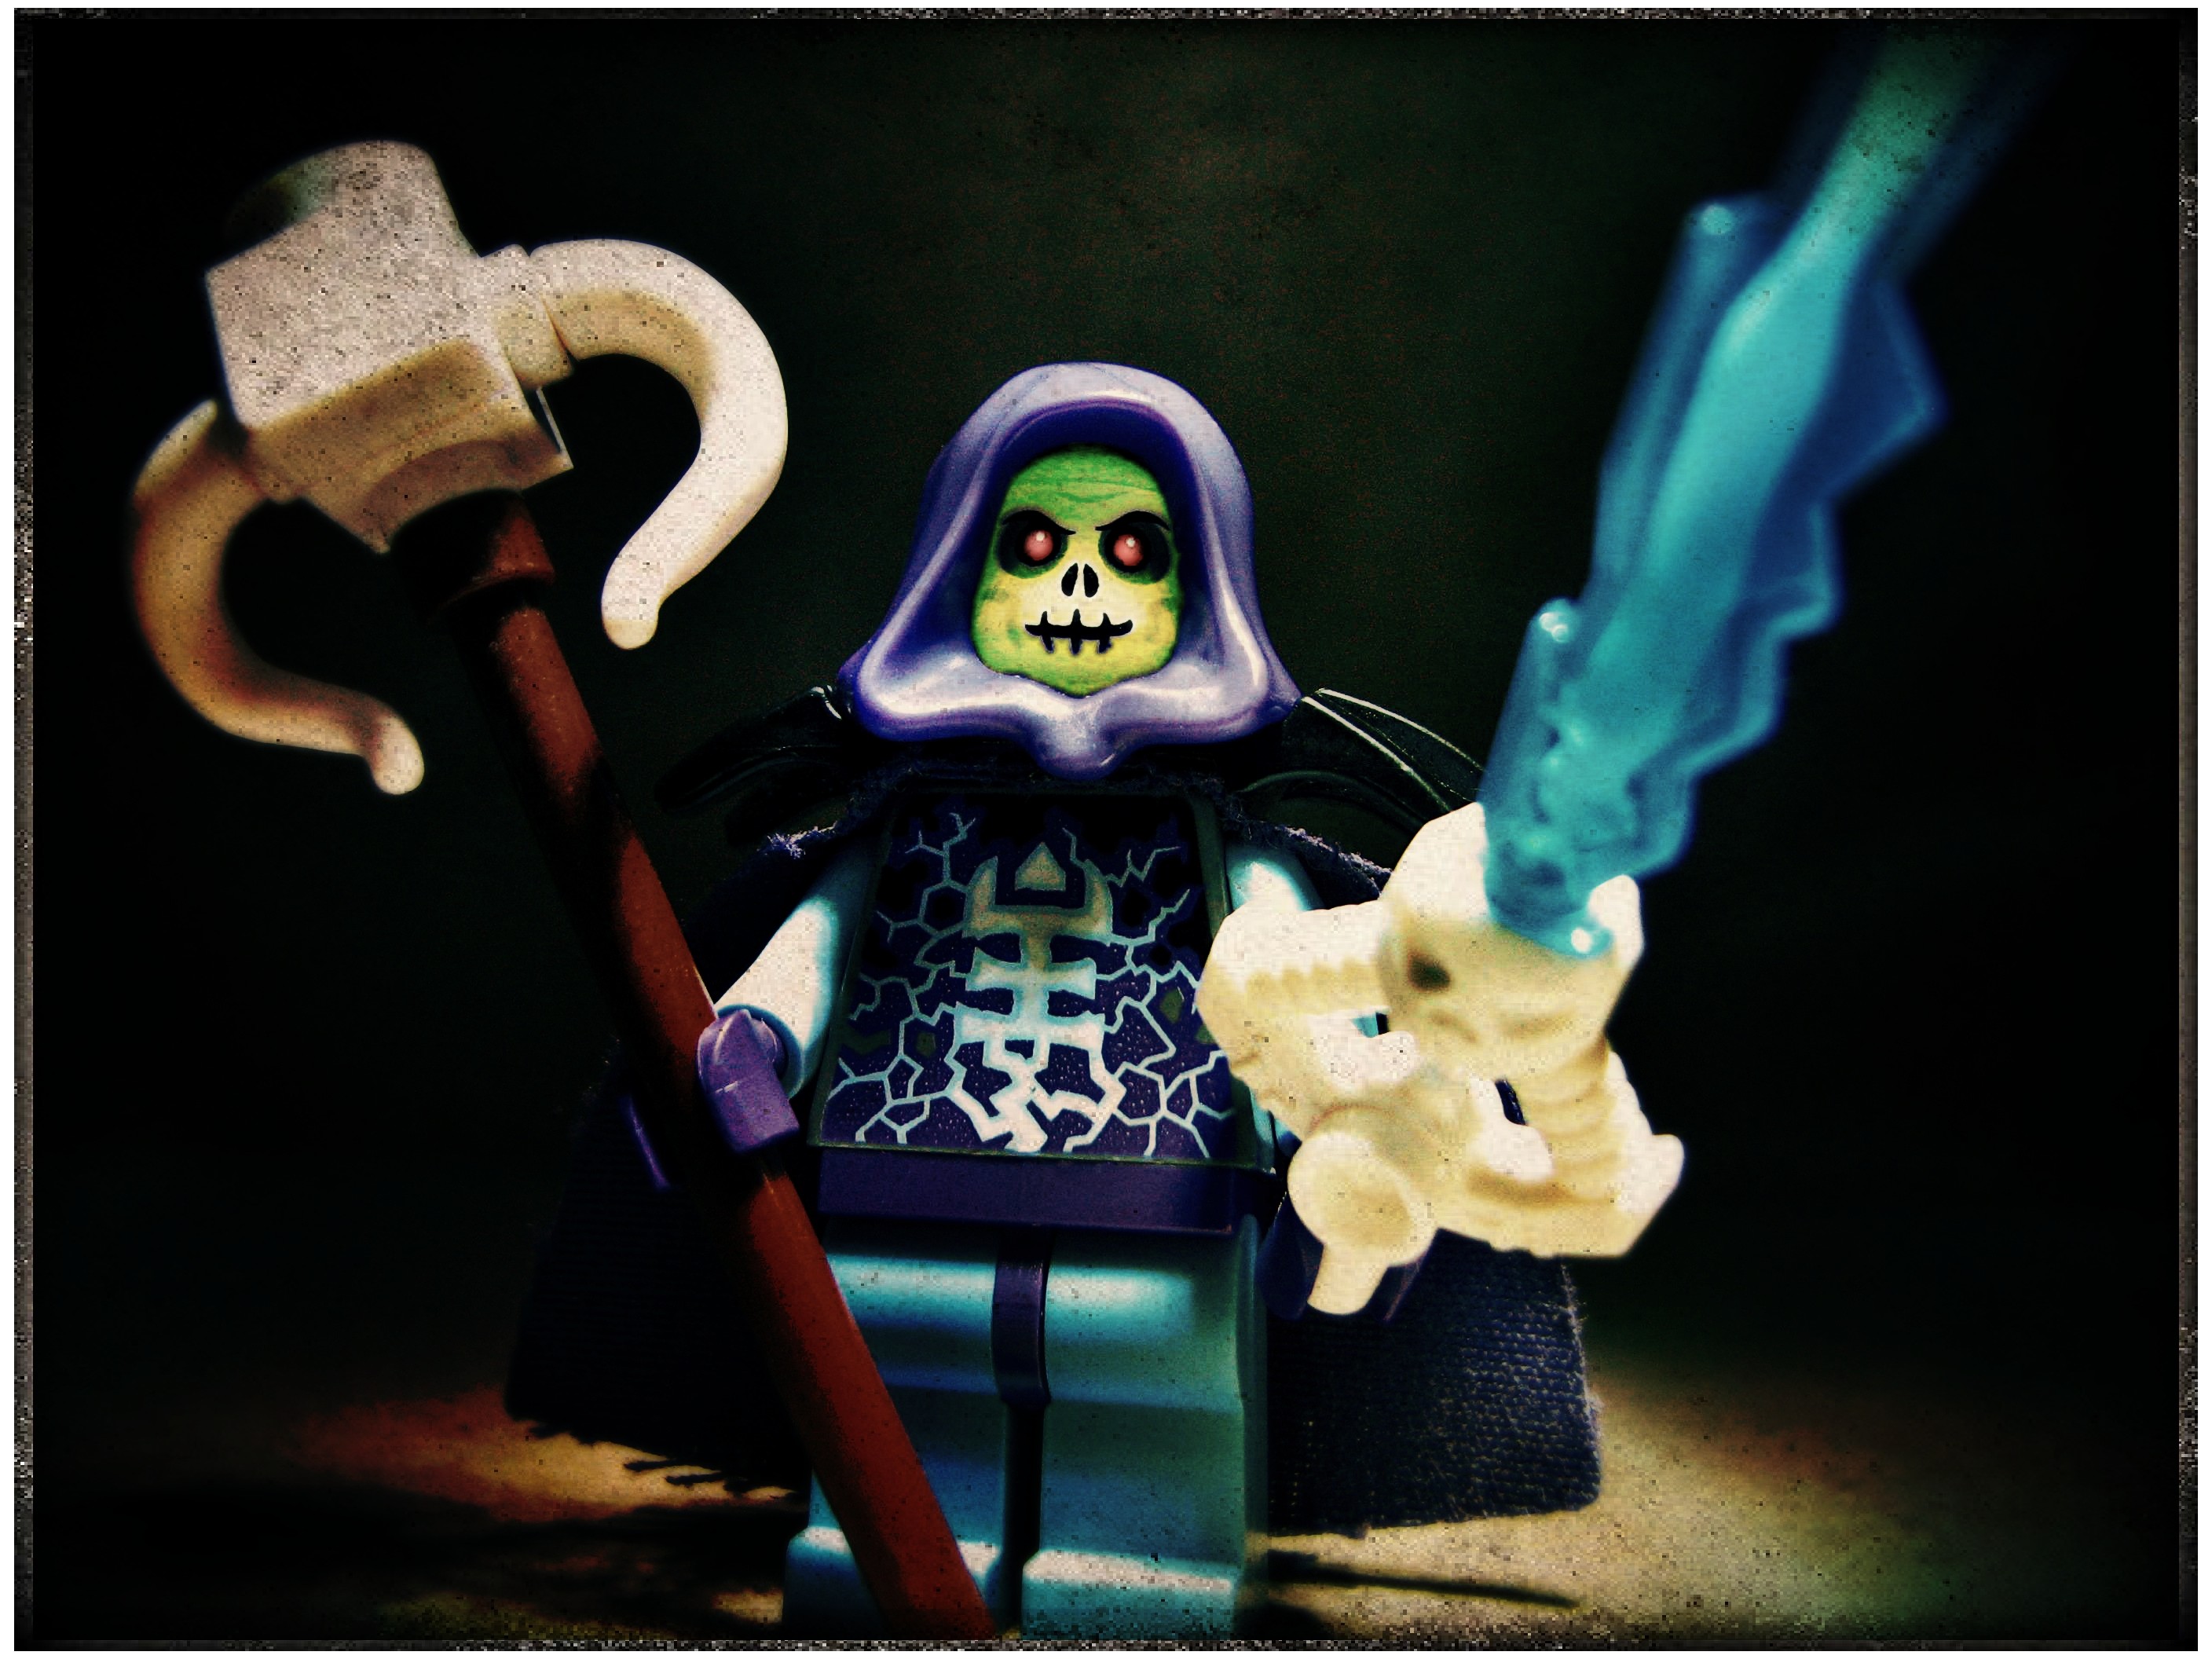 2816x2112 LEGO custom Skeletor heman masters universe cartoon 80s retro Toy villain  skeleton staff sword